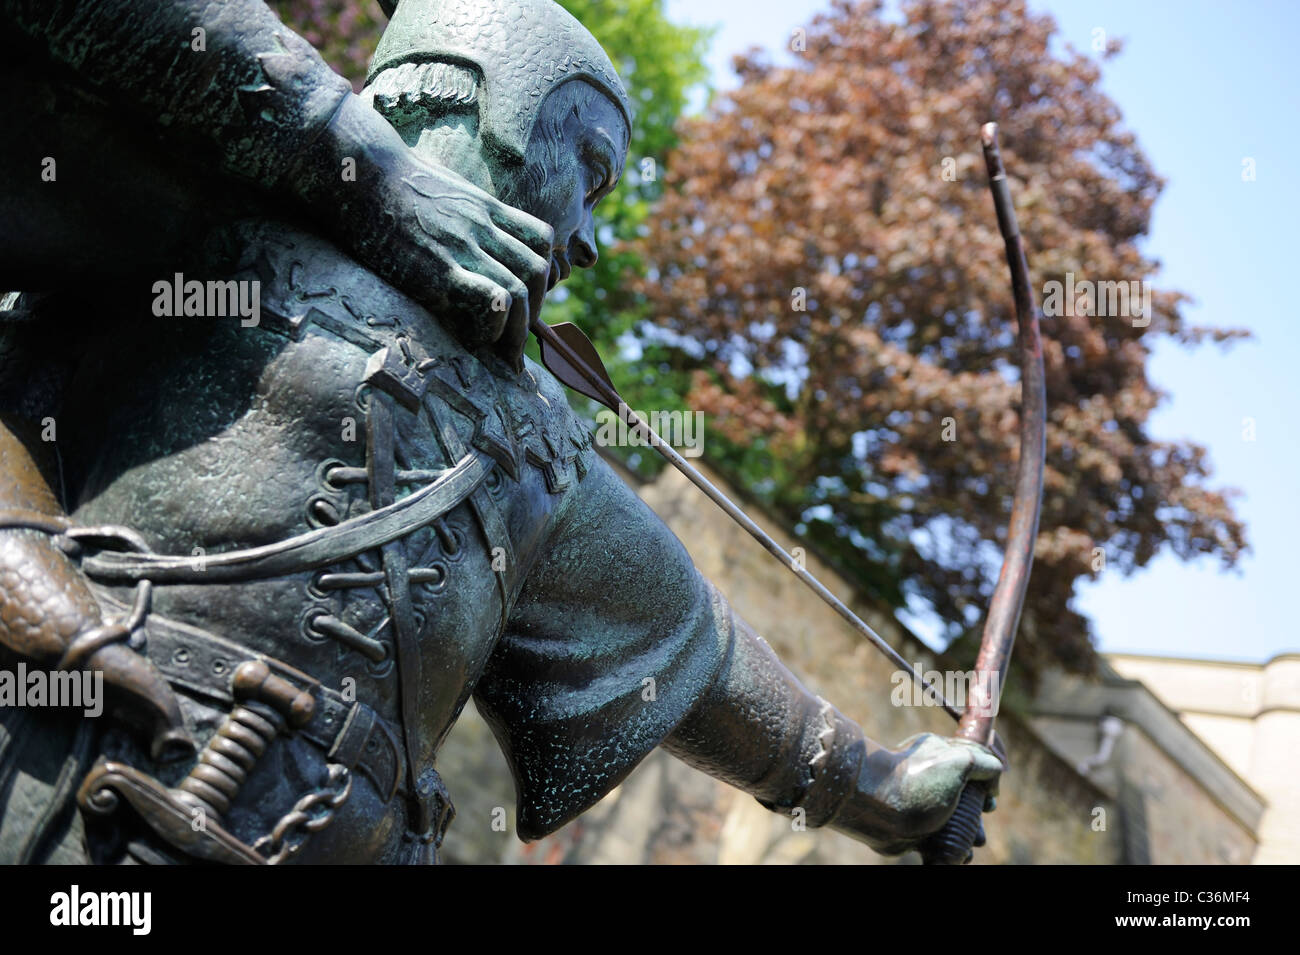 Stock Foto von Robin Hood-Statue in Nottingham. Stockfoto